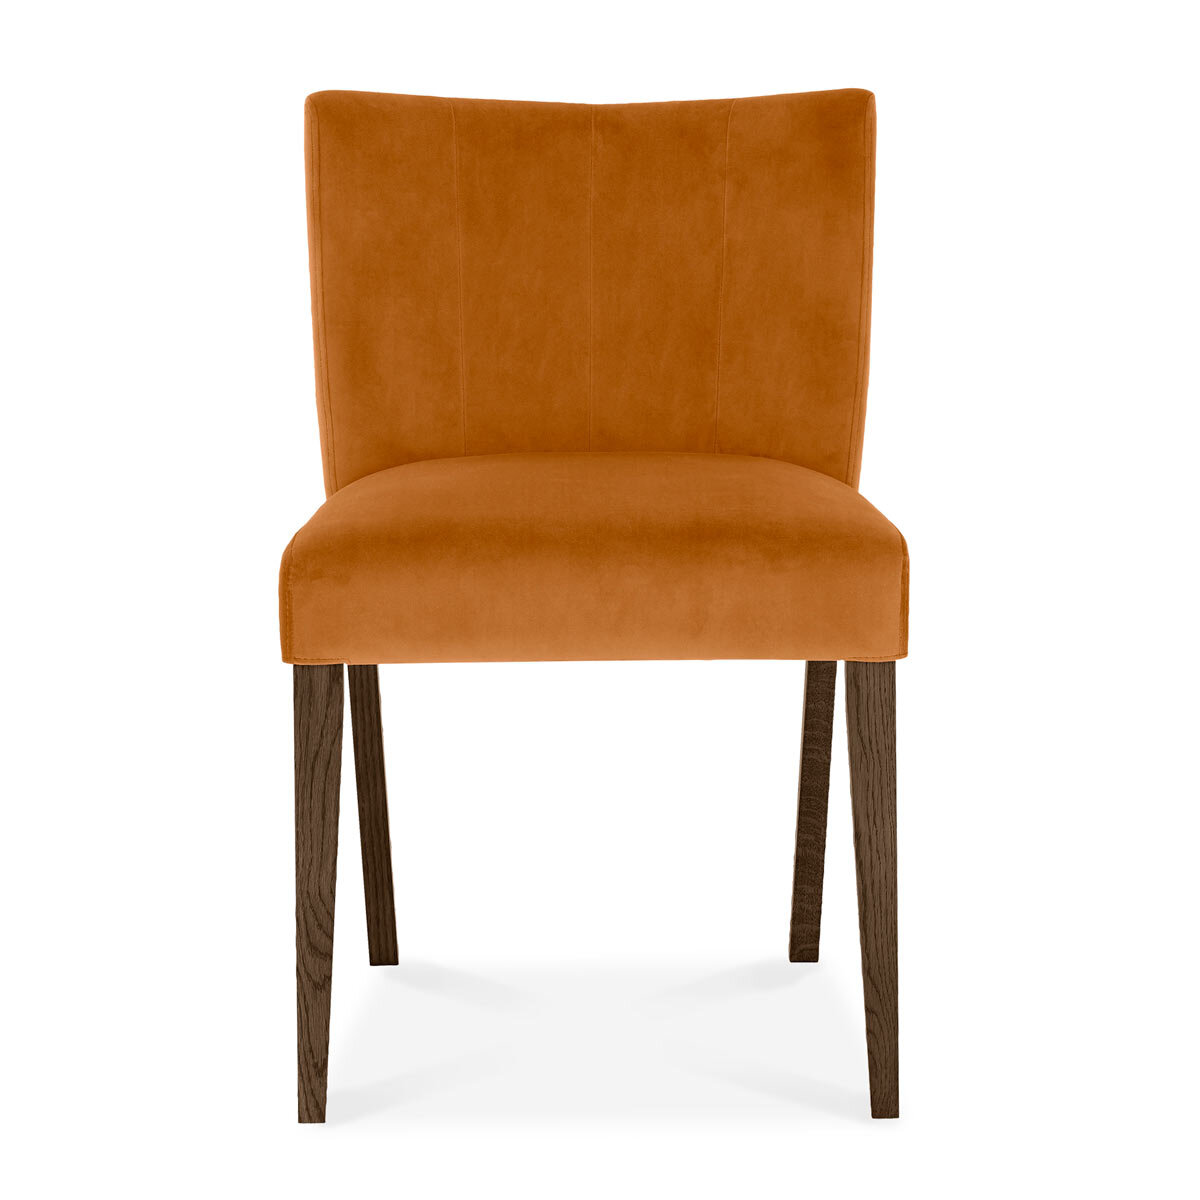 Bentley Designs Milan Low Back Orange Velvet Upholstered Chair, 2 Pack